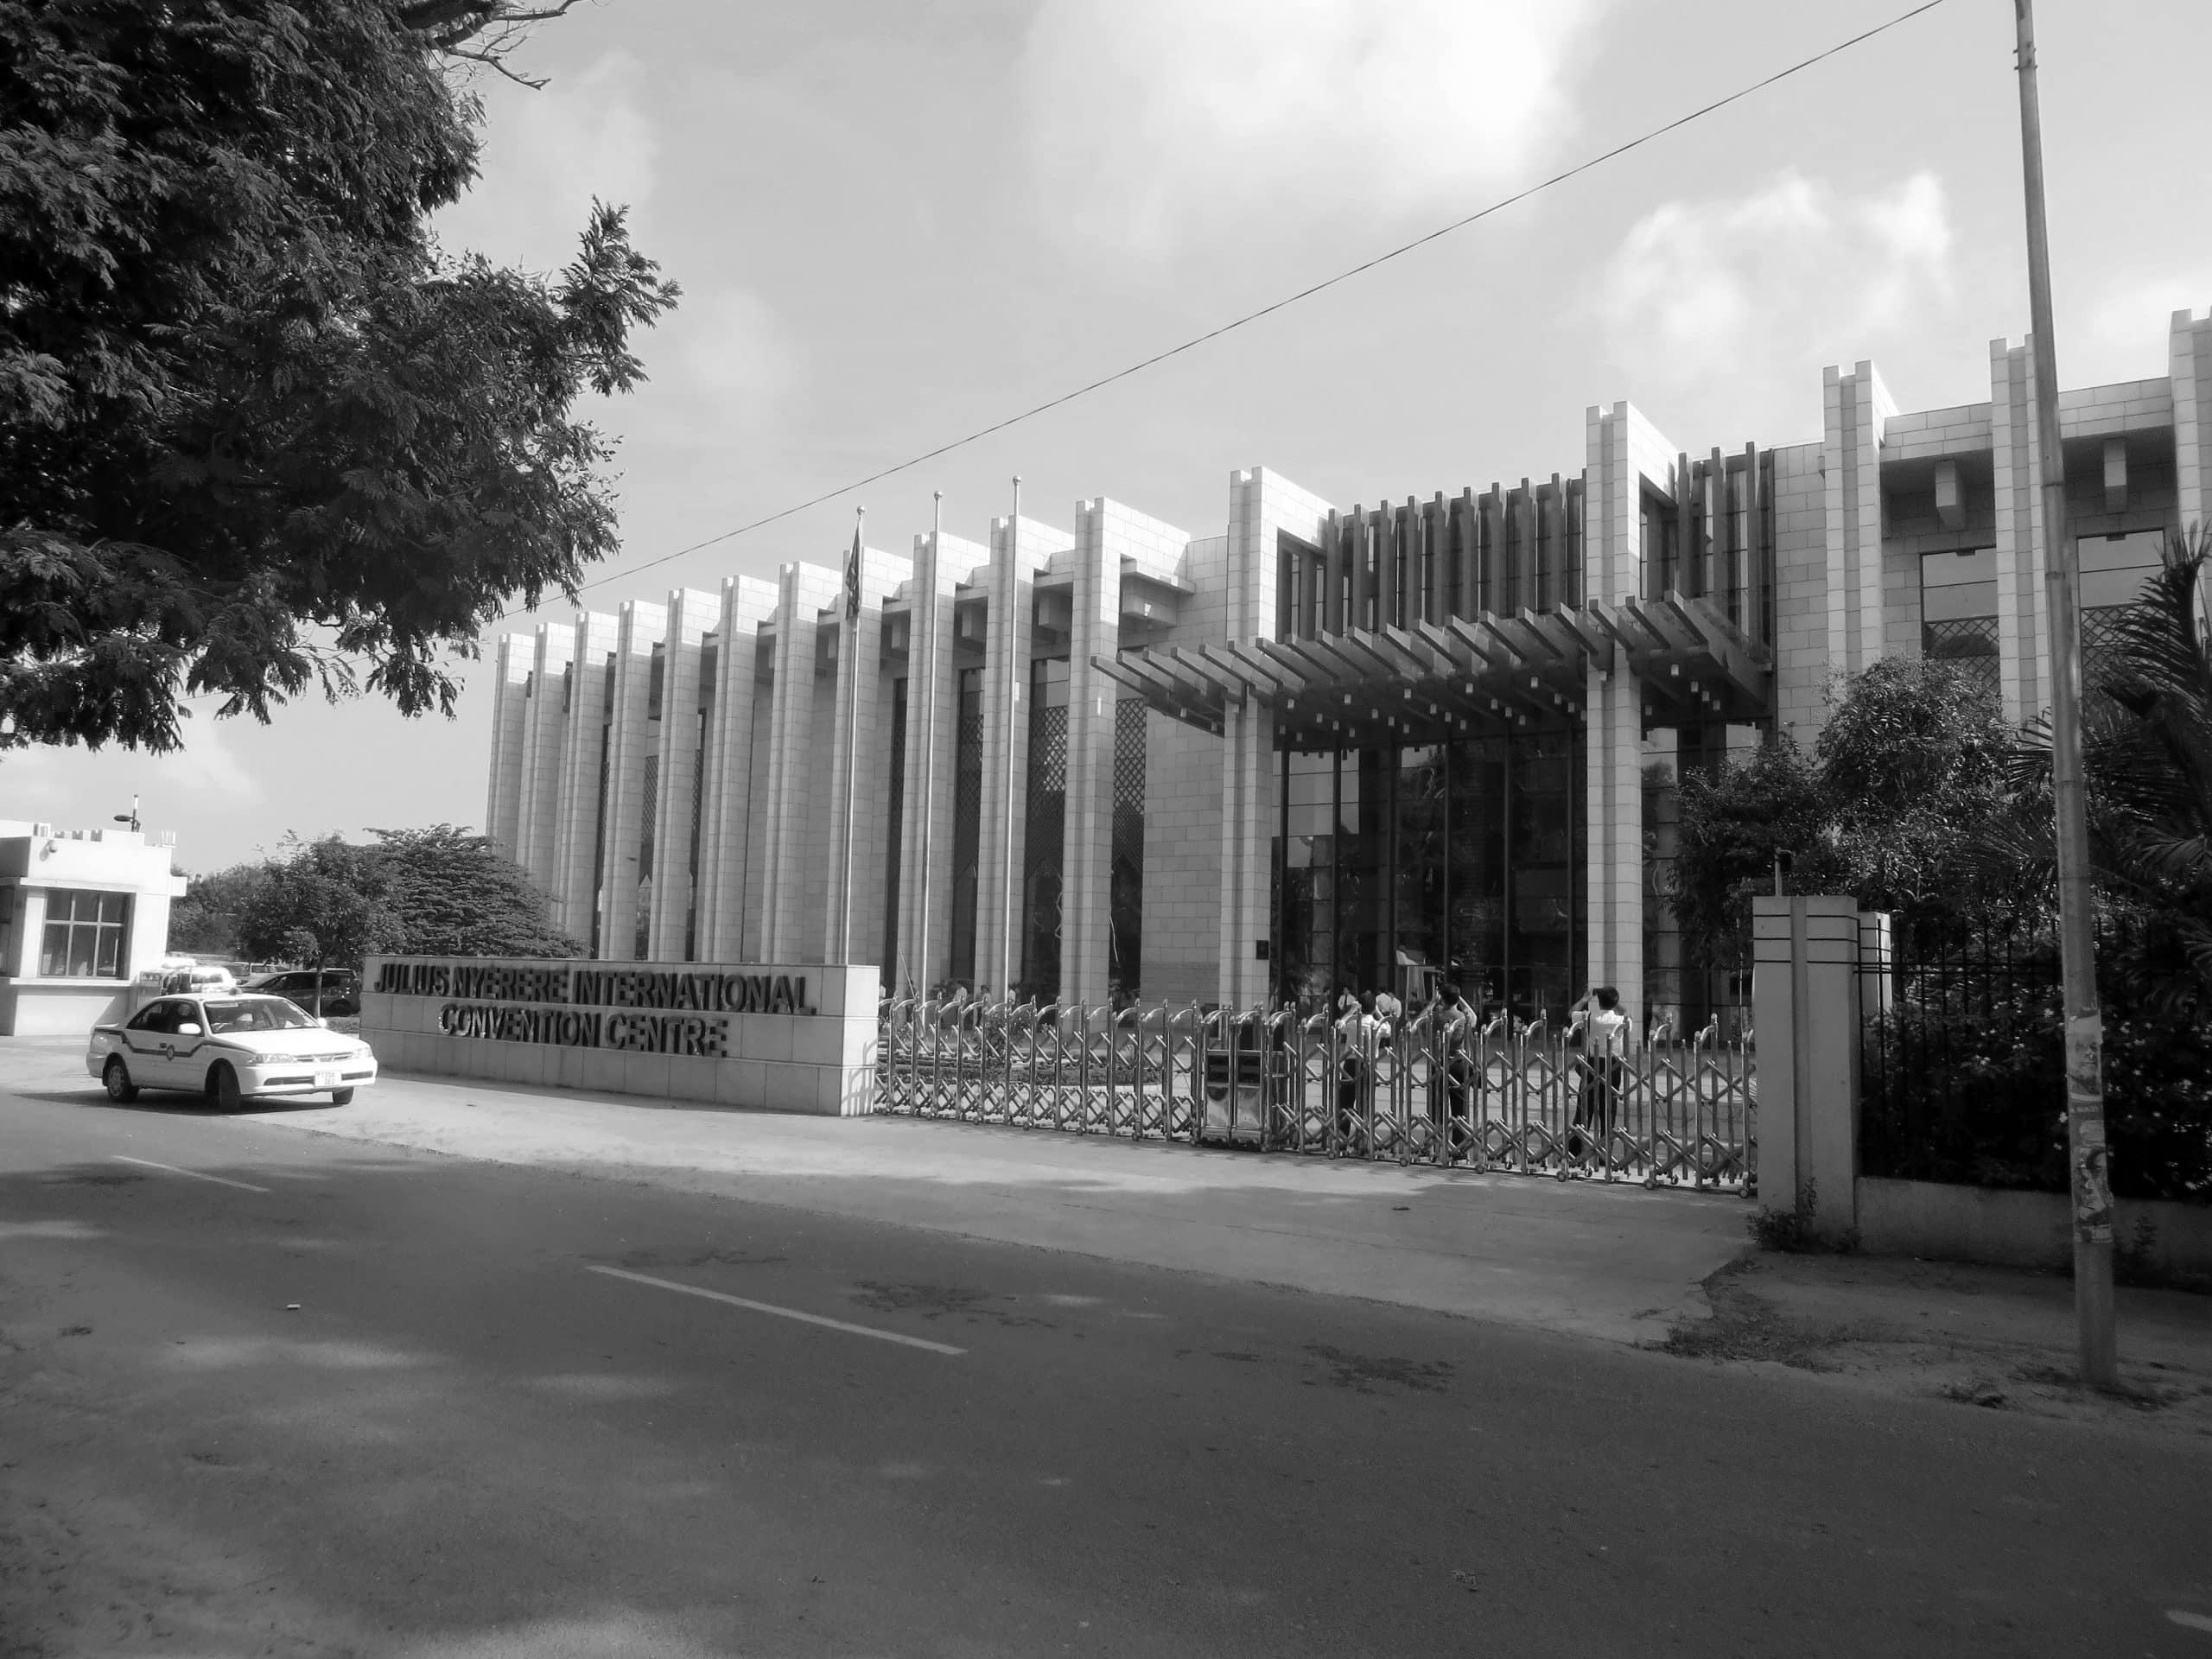 Mwalimu Julius Nyerere International Convention Centre in Dar es Salaam